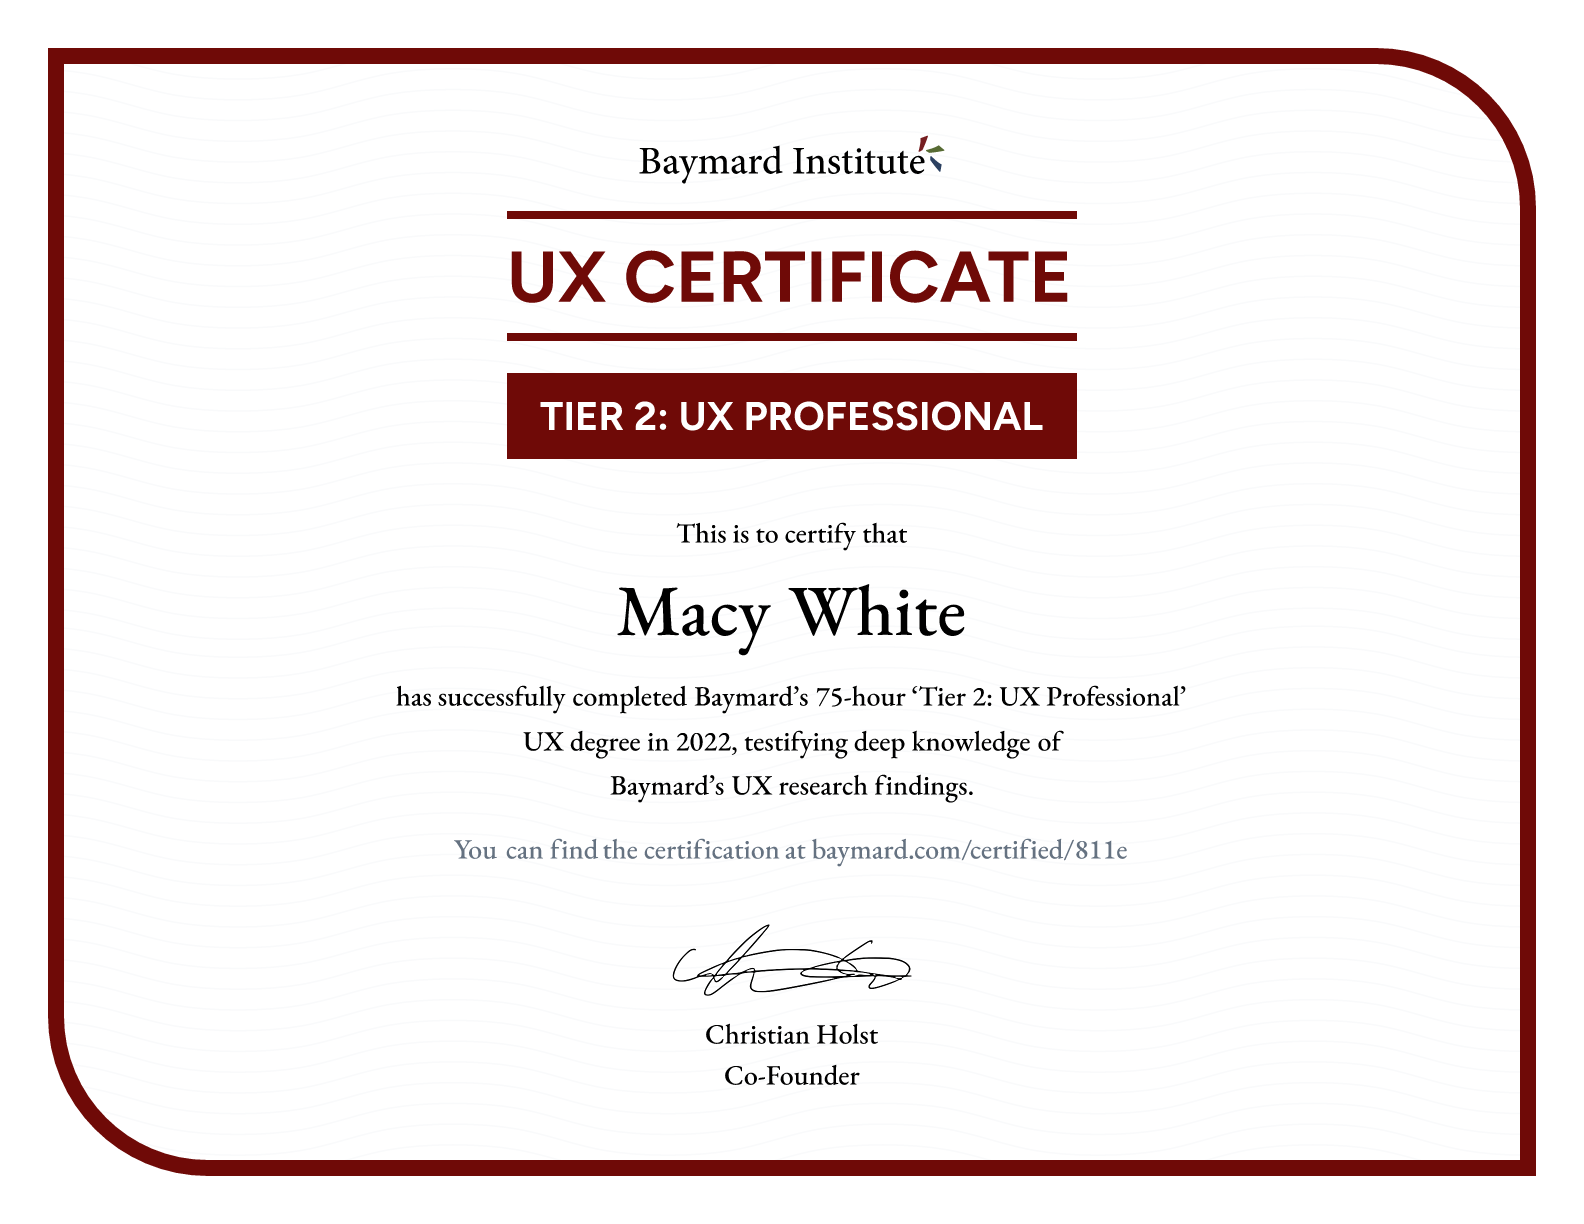 Macy White’s certificate